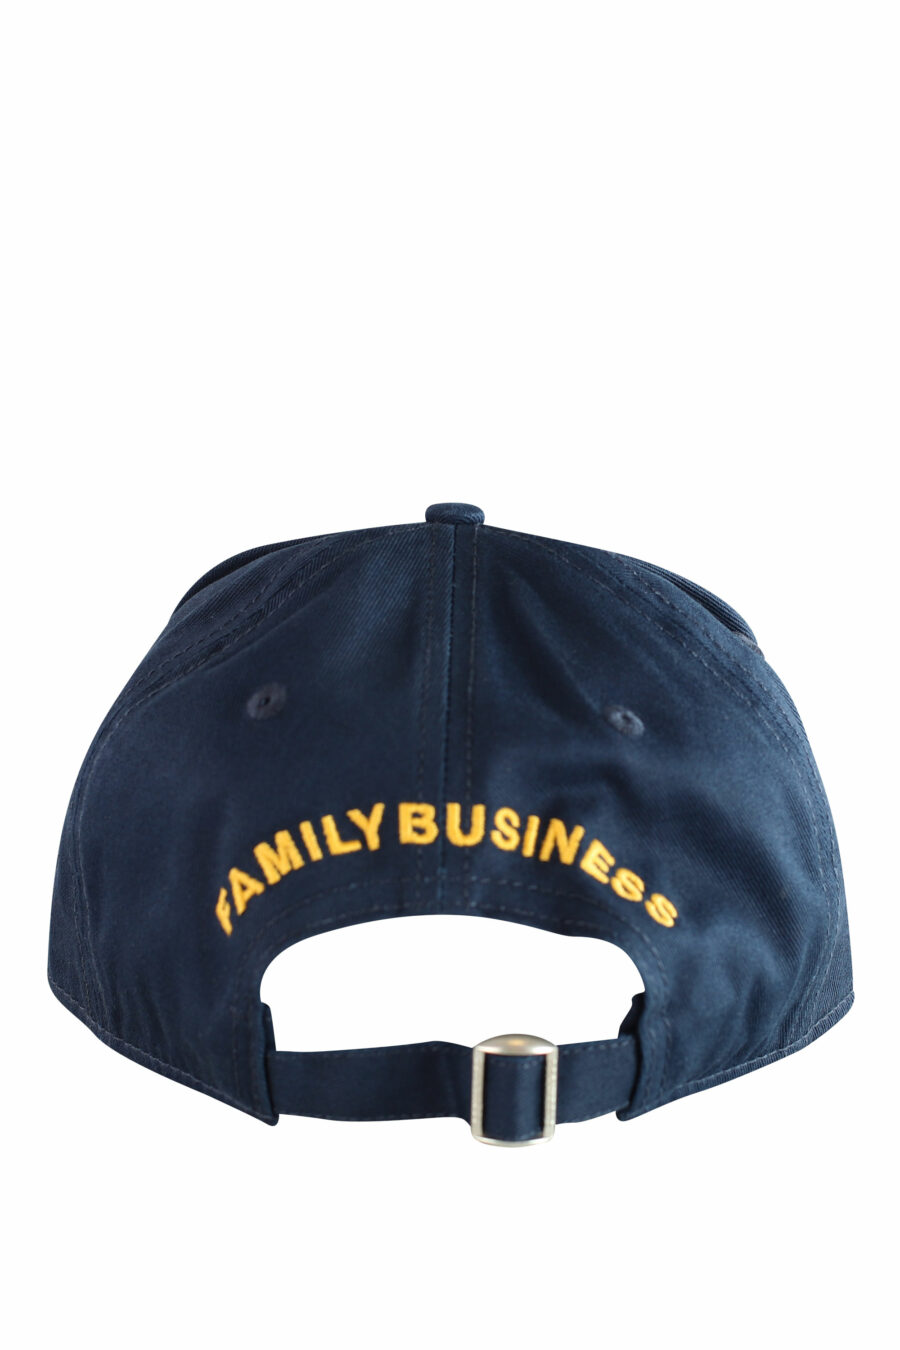 Gorra azul con recuadro blanco con logo y detalles amarillos - IMG 1228